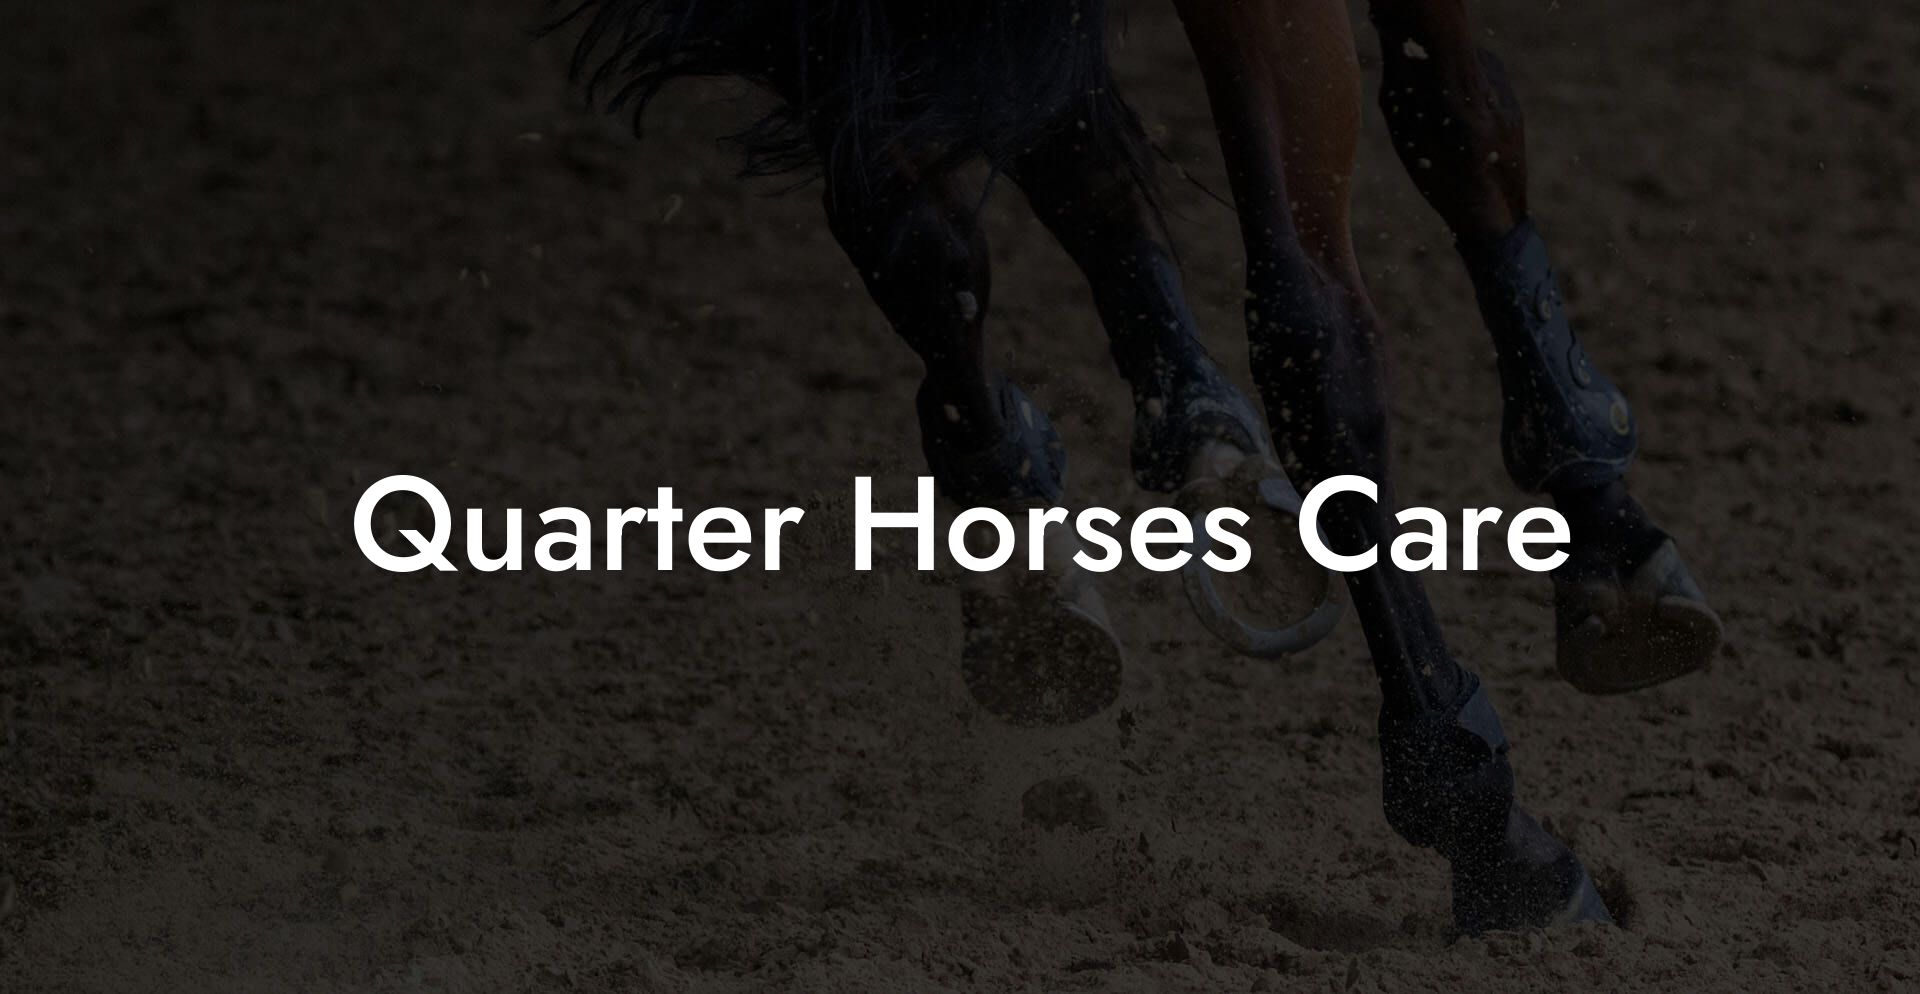 Quarter Horses Care